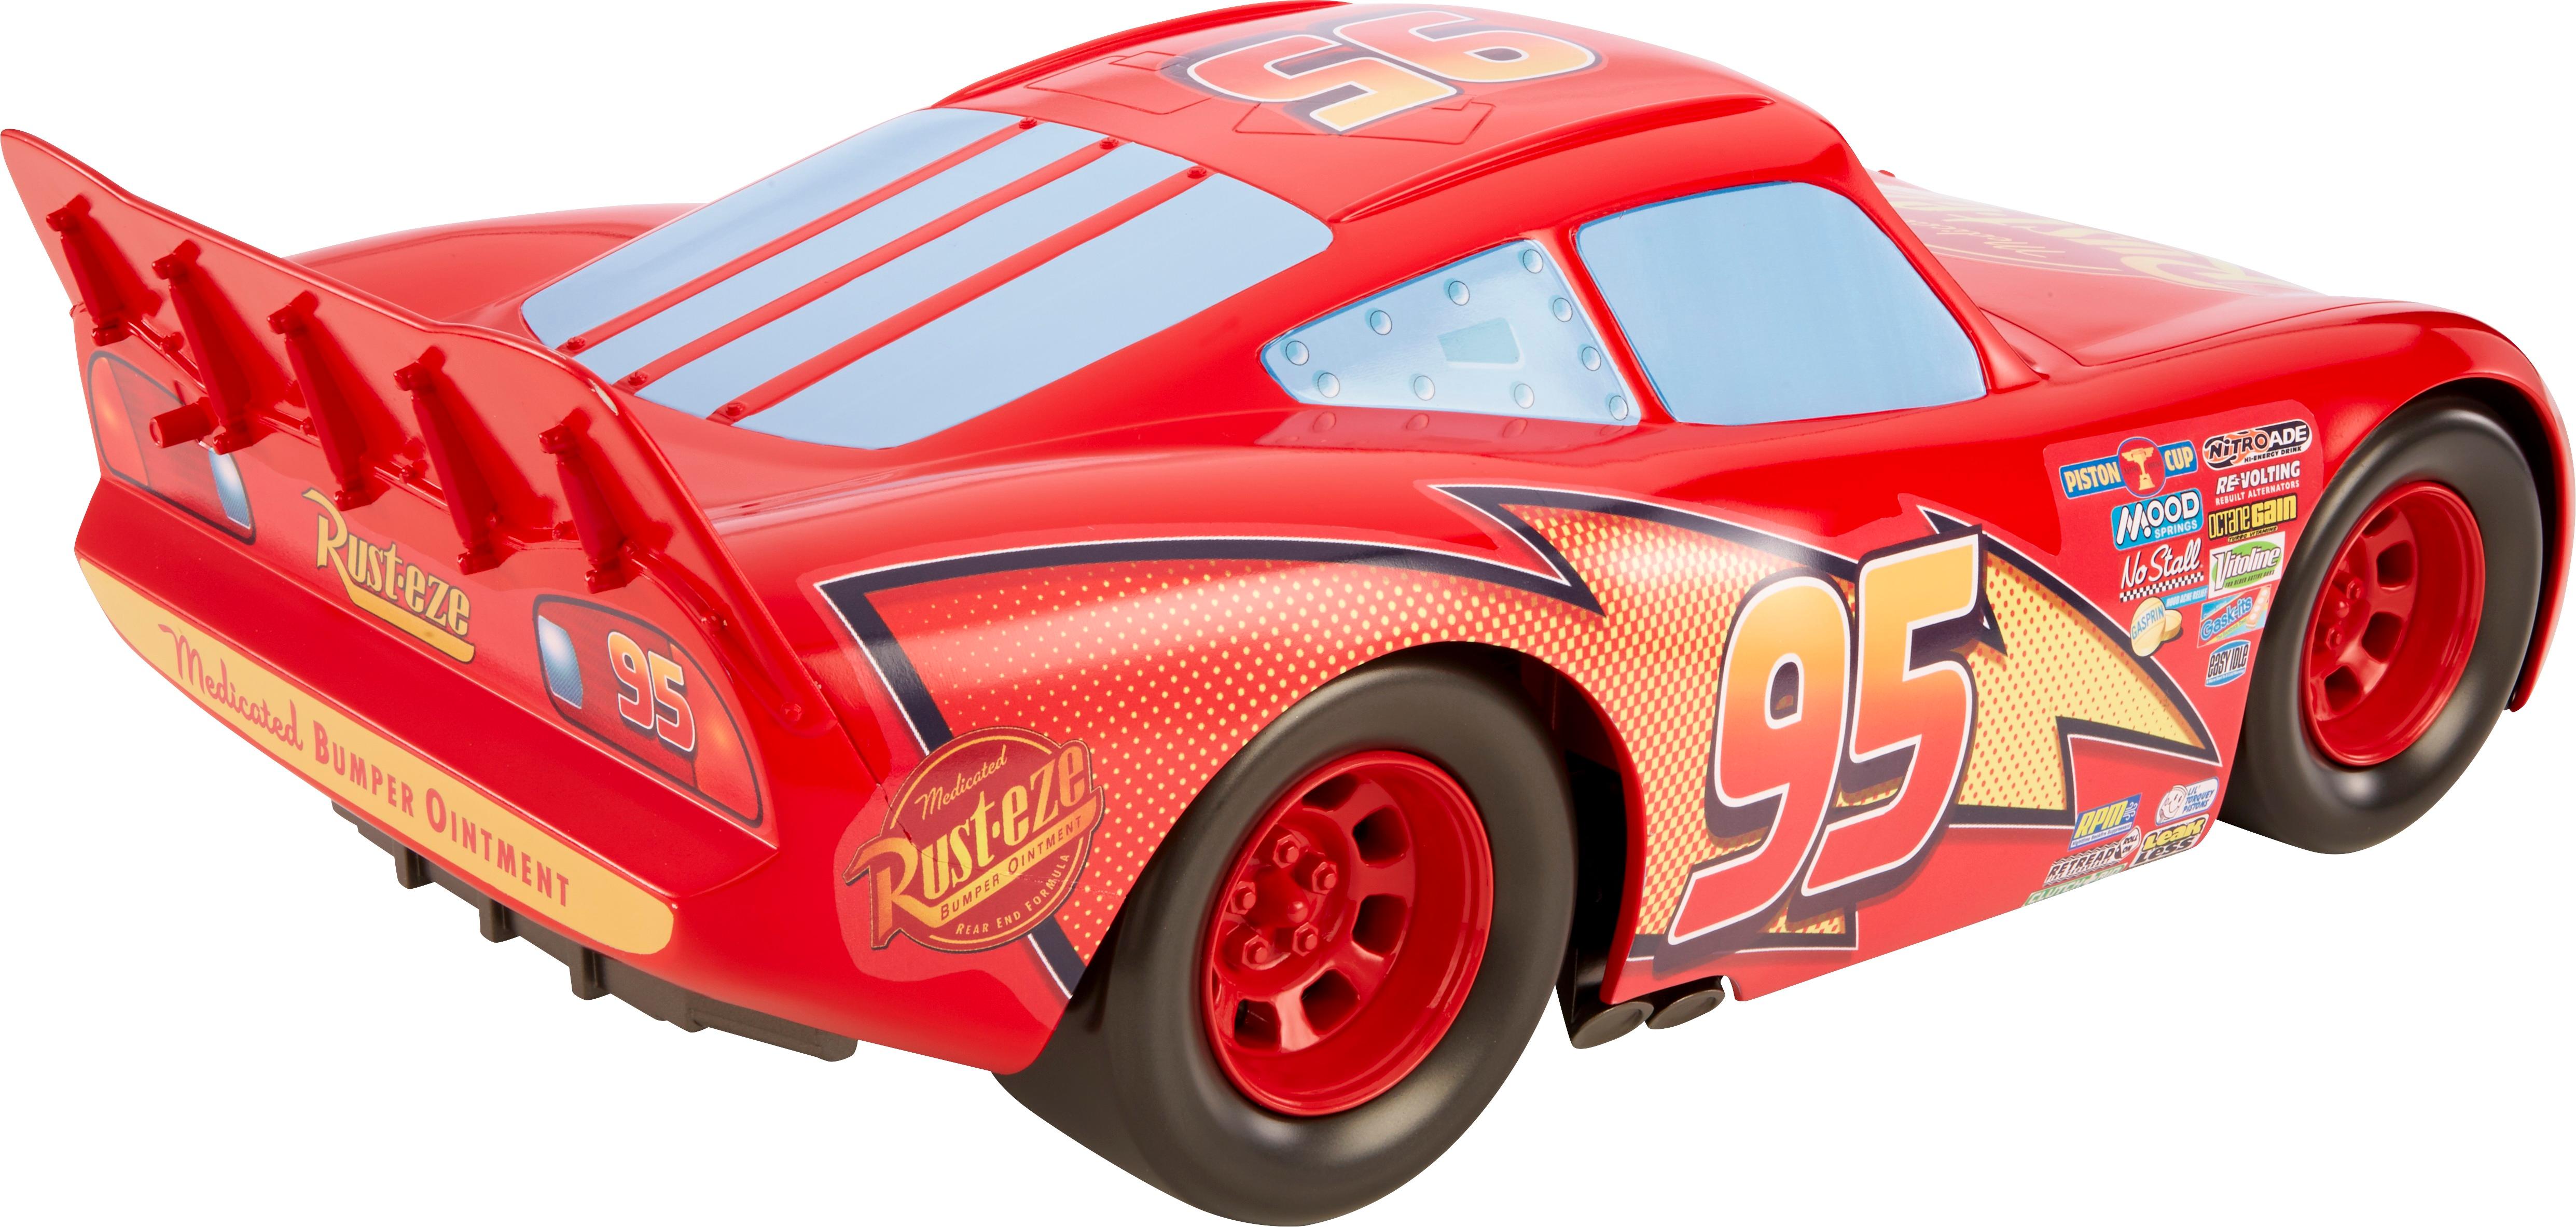 Lightning McQueen bicon Sticker for Sale by 123gracet